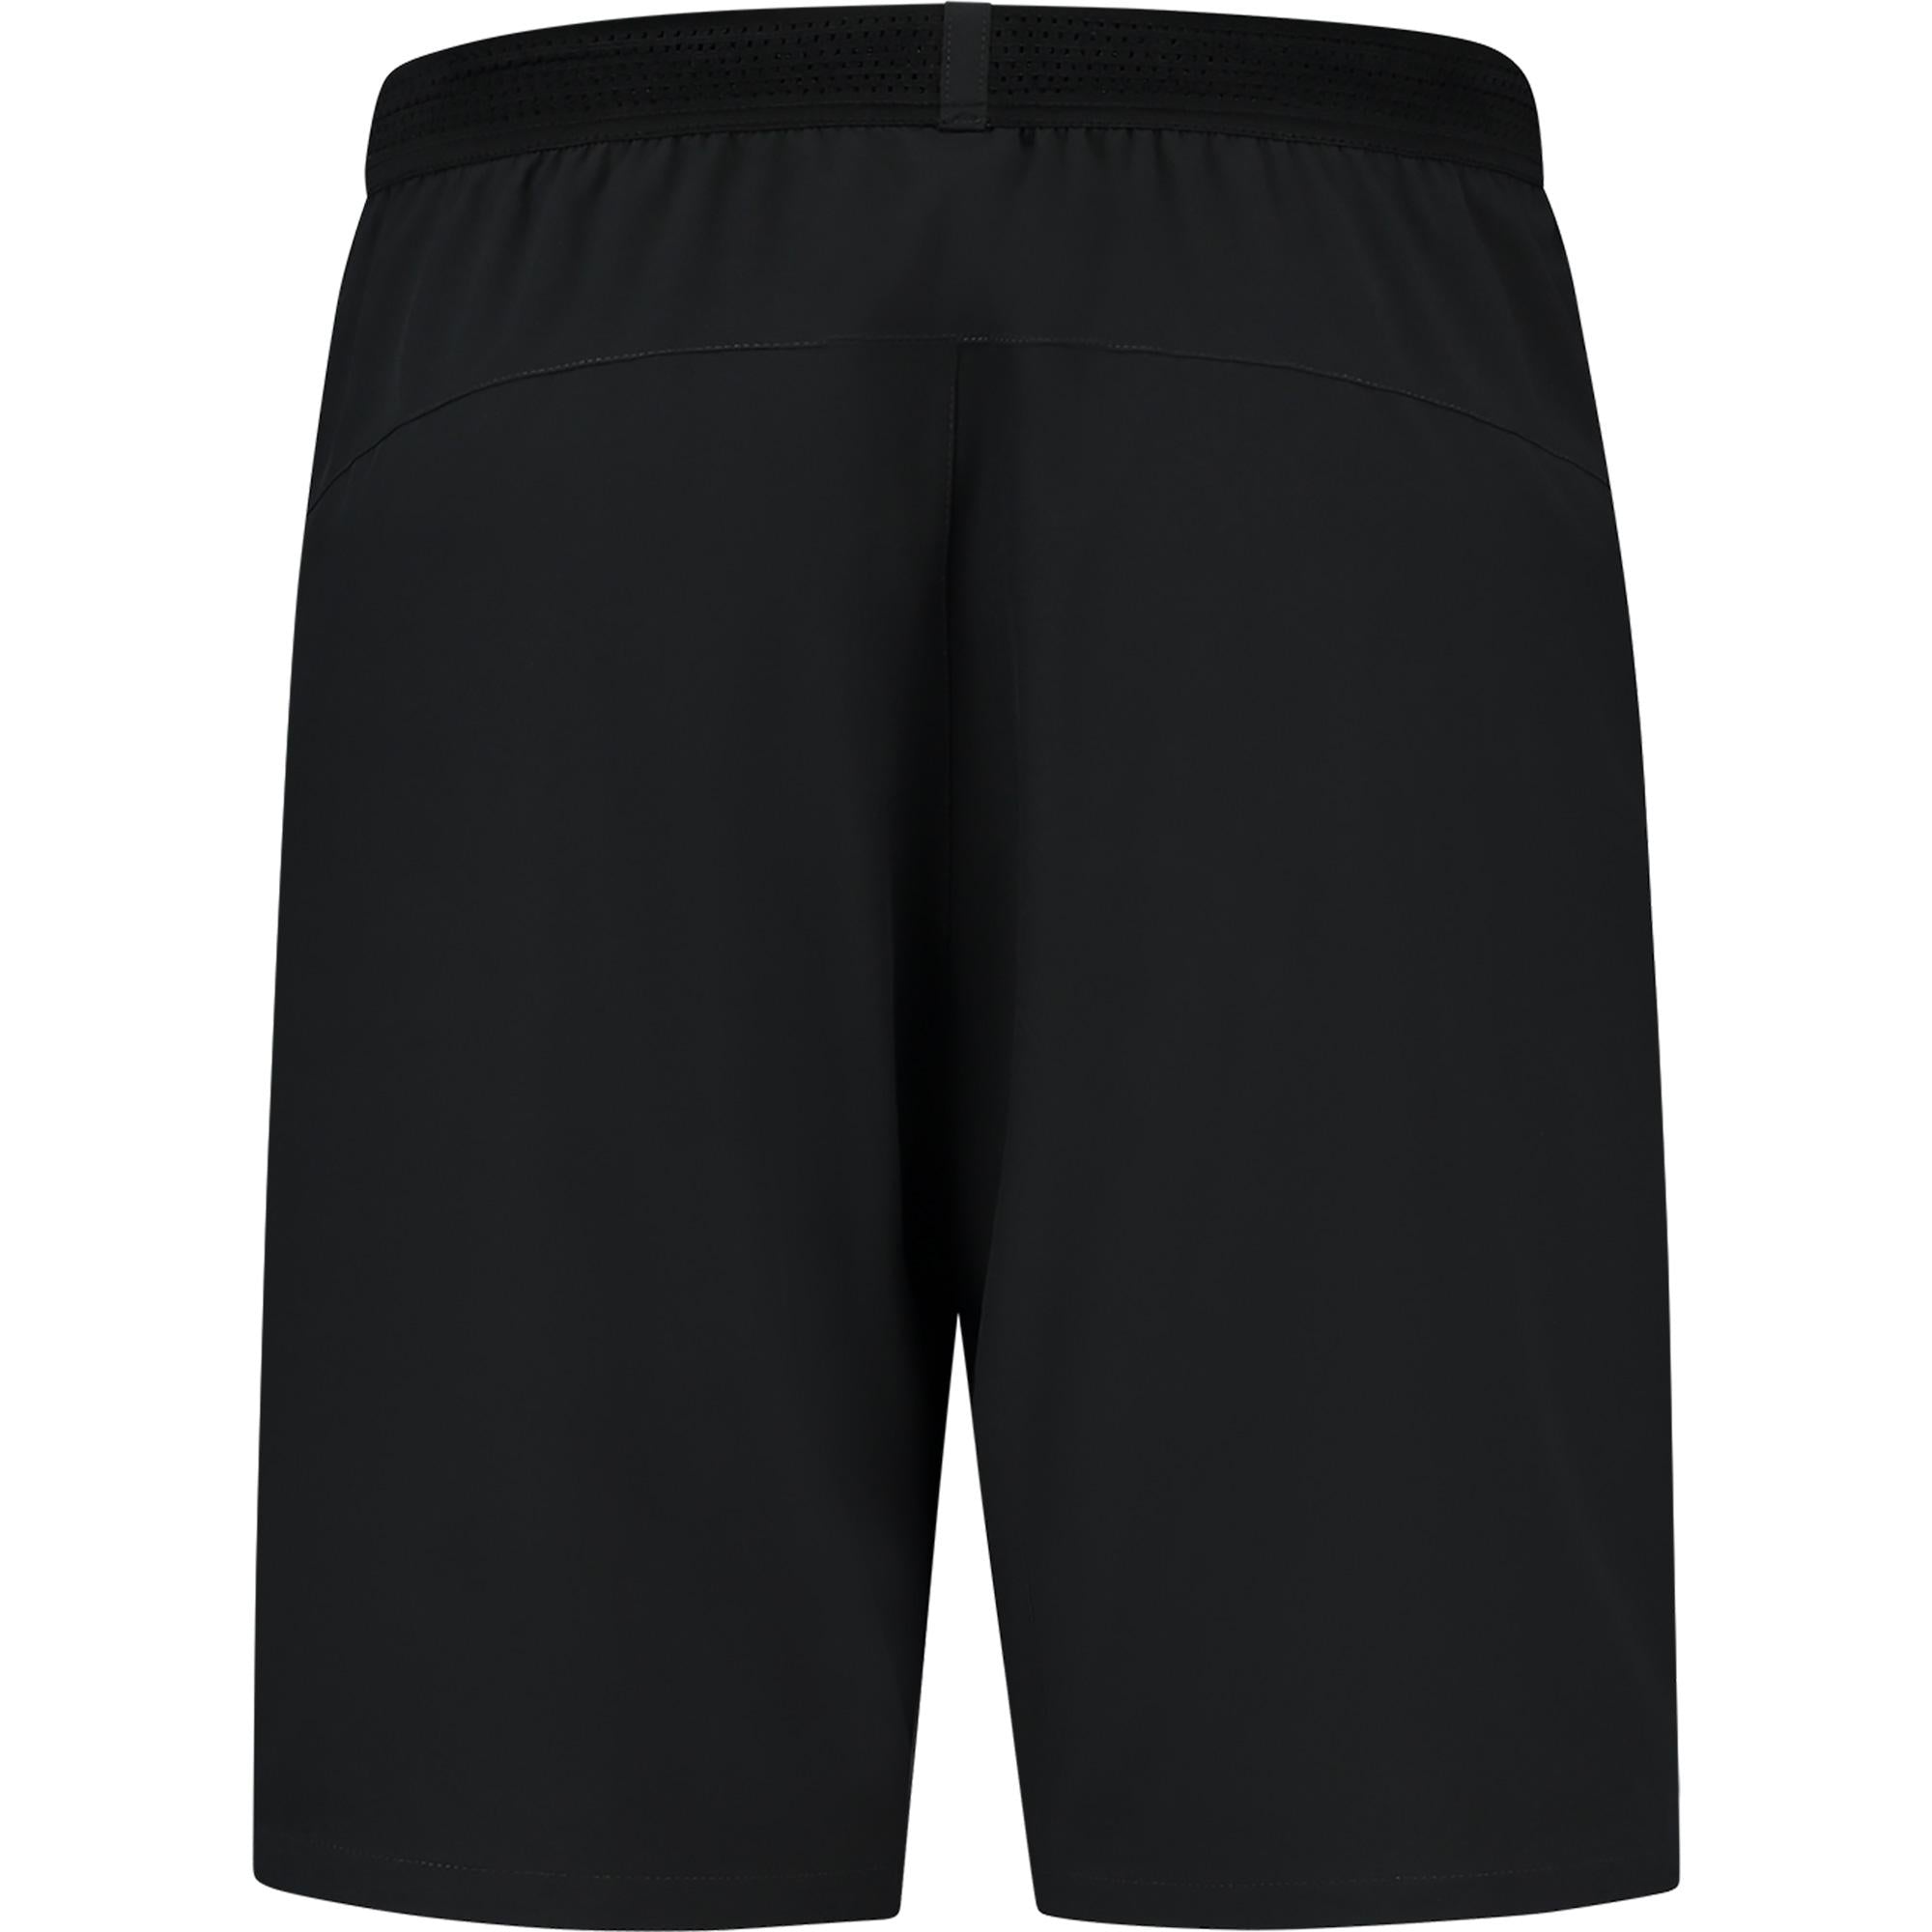 K-Swiss Mens Hypercourt Shorts - Black